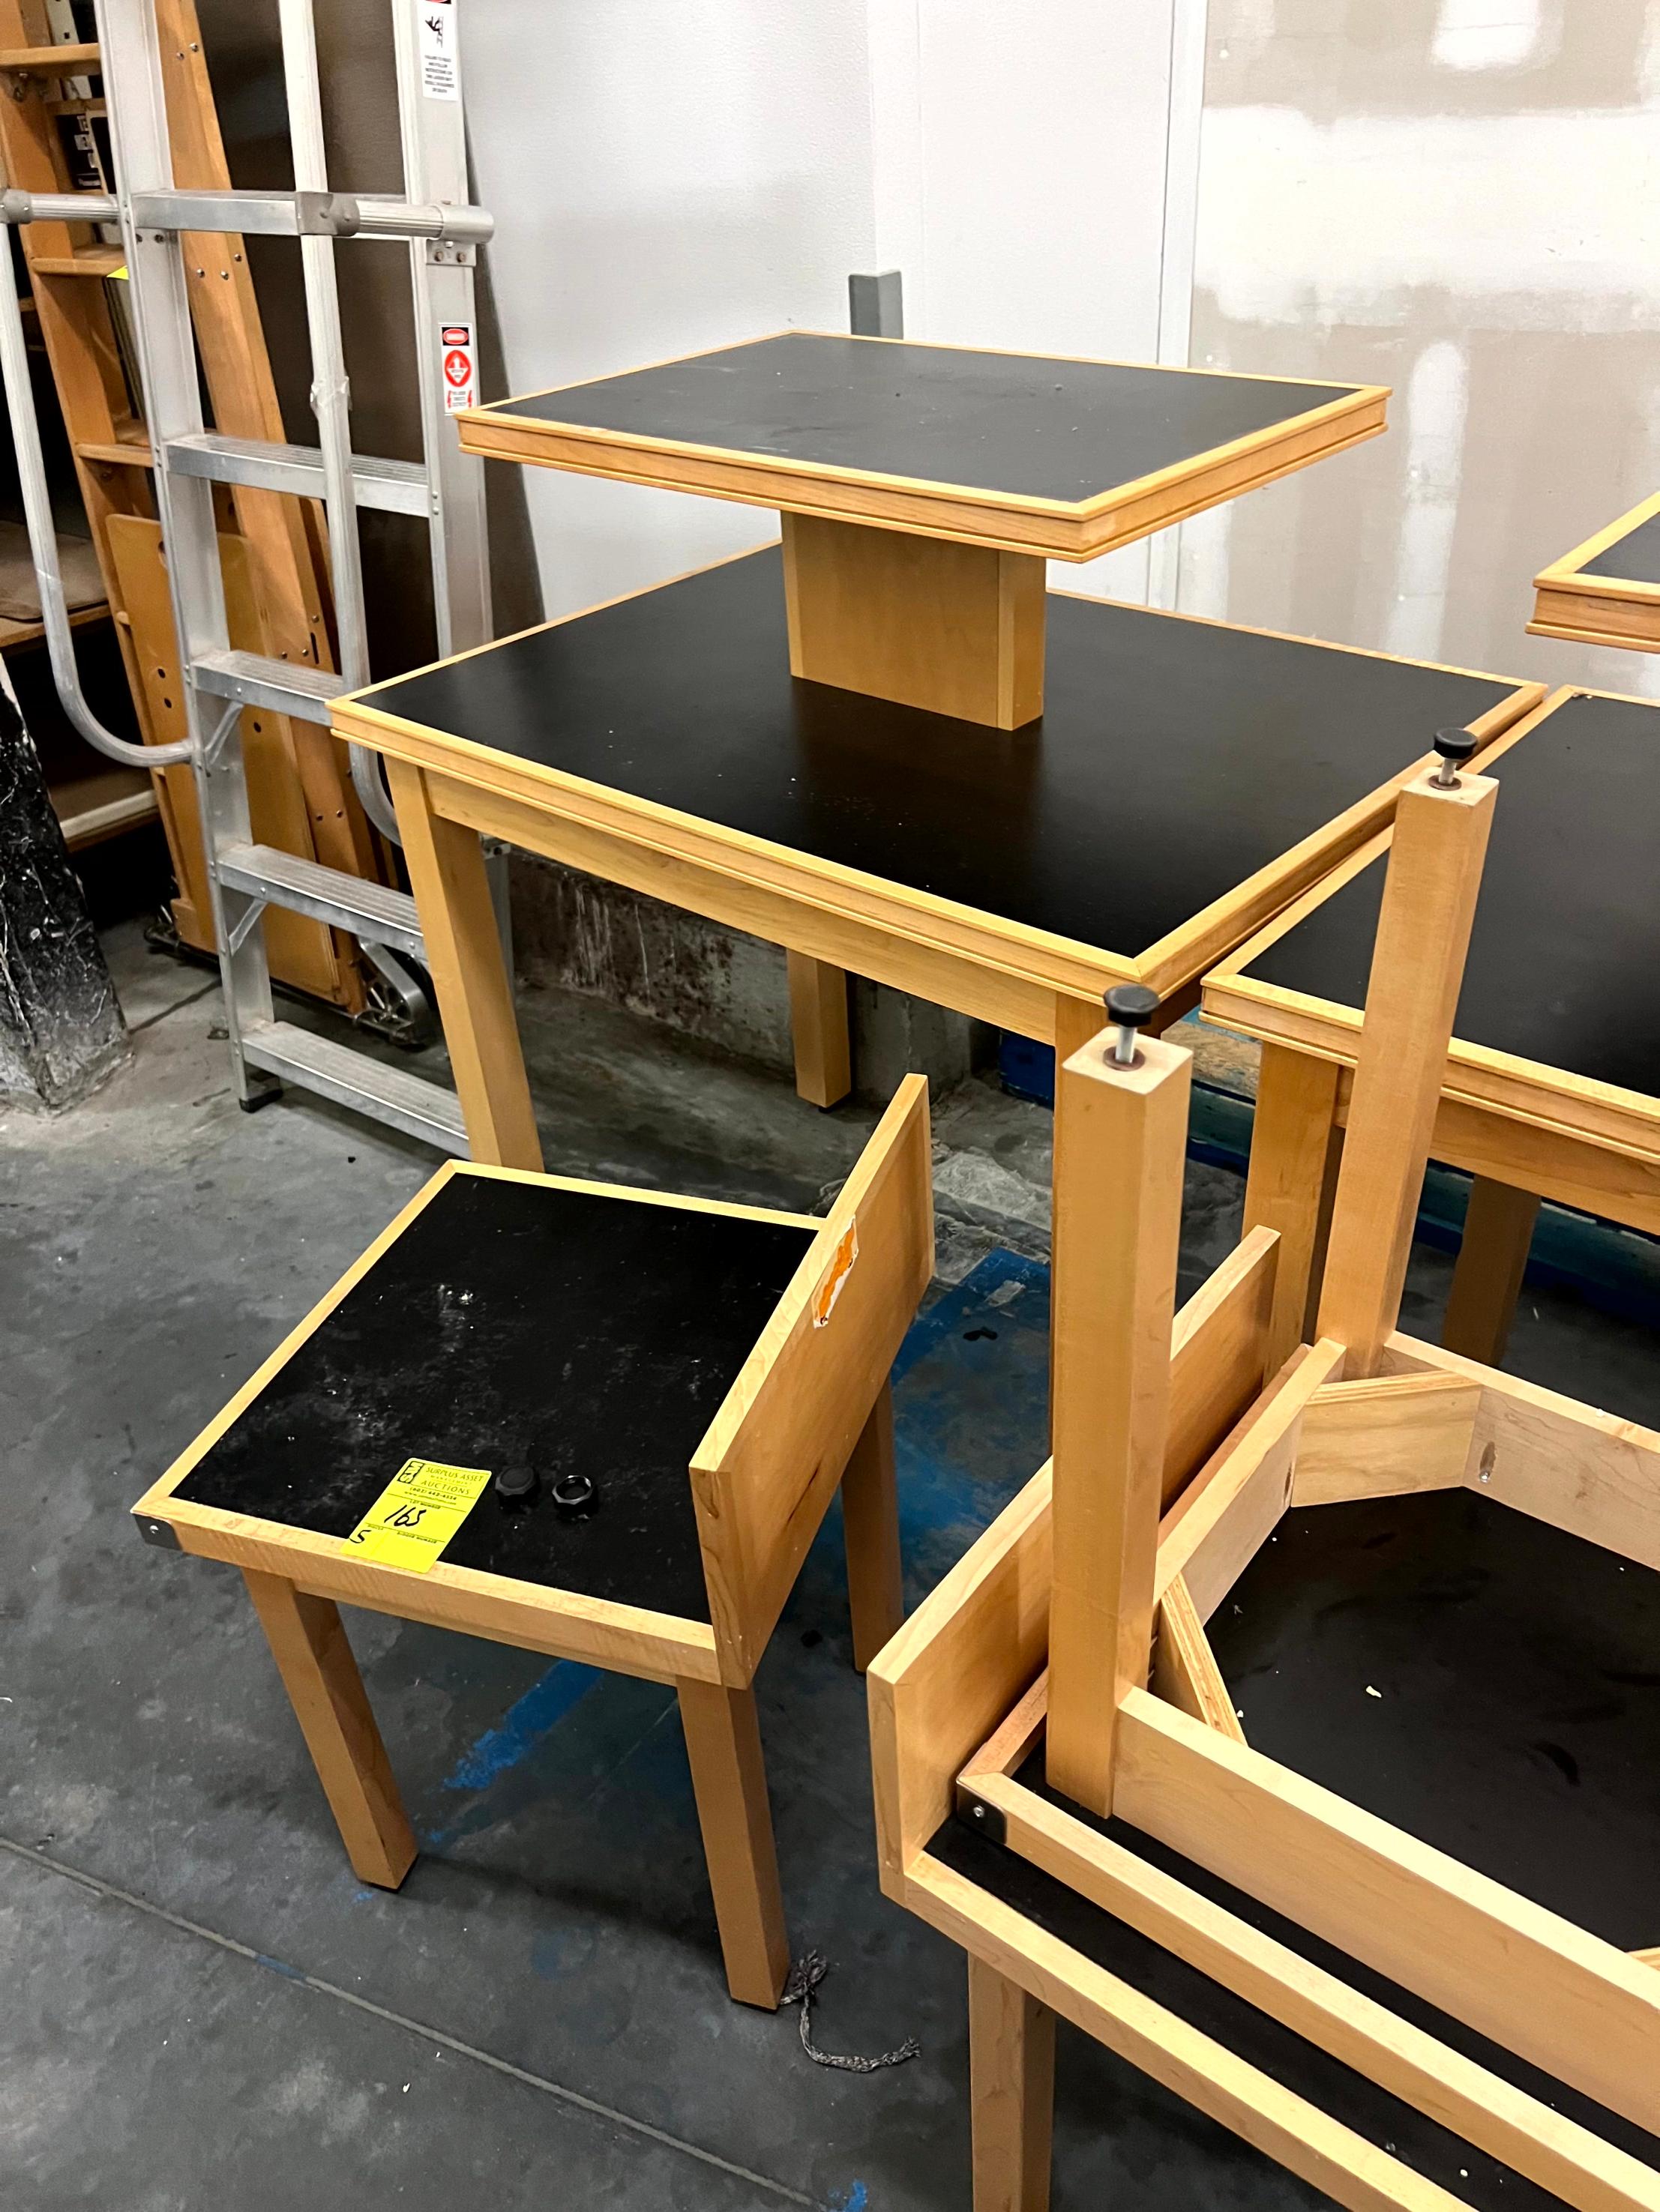 Wood Display Tables